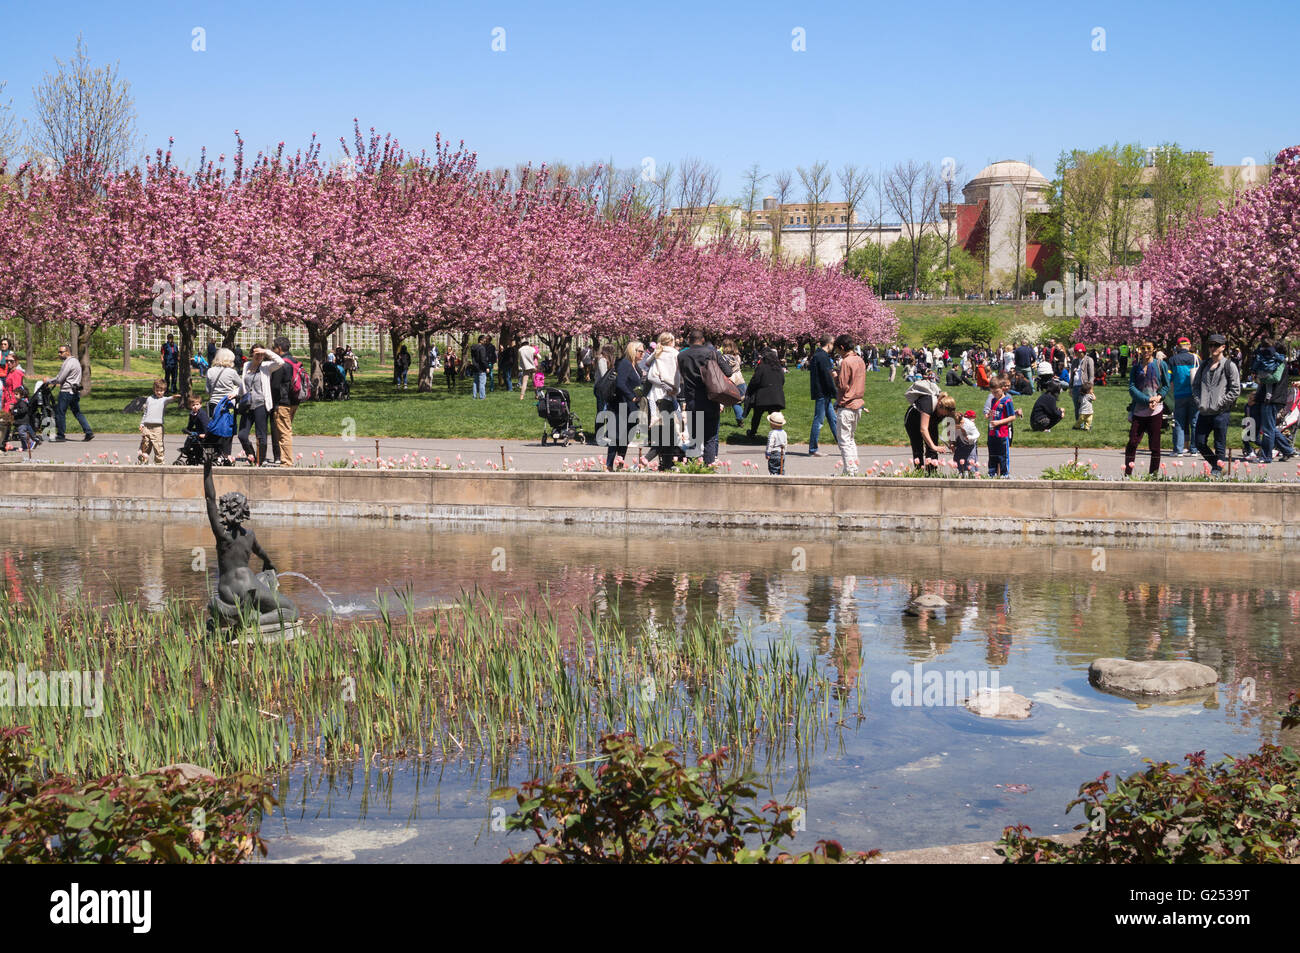 Visitors enjoying the spring blossom in Brooklyn Botanic Garden, New York, USA Stock Photo